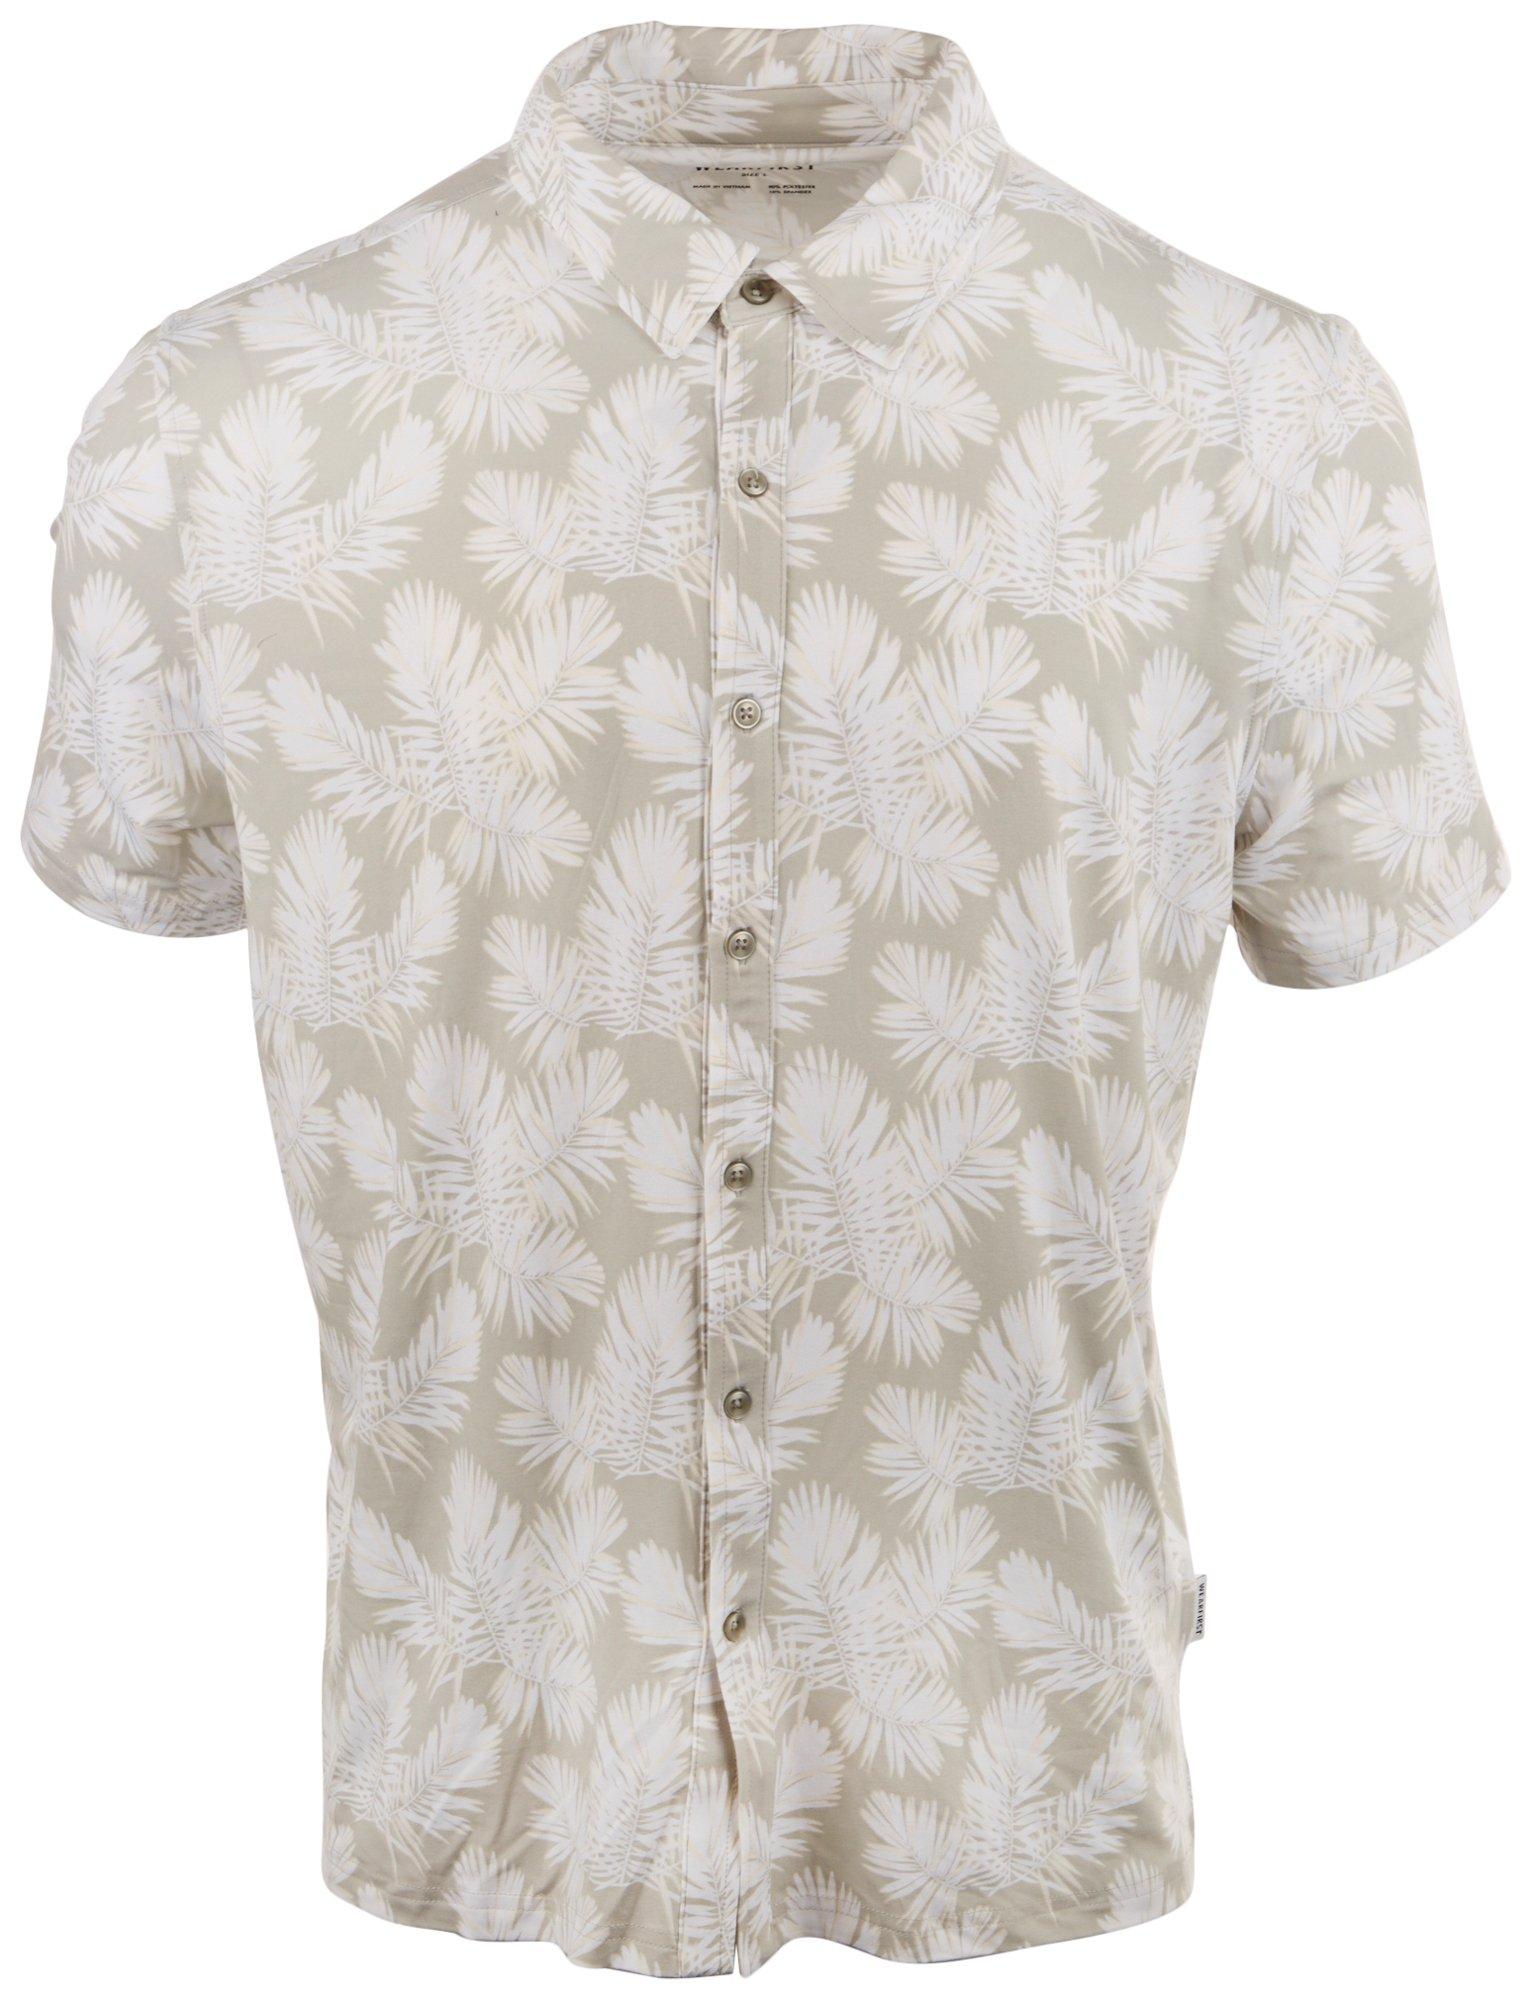 Wearfirst Mens Knit Mist Palm Print  Short Sleeve Shirt